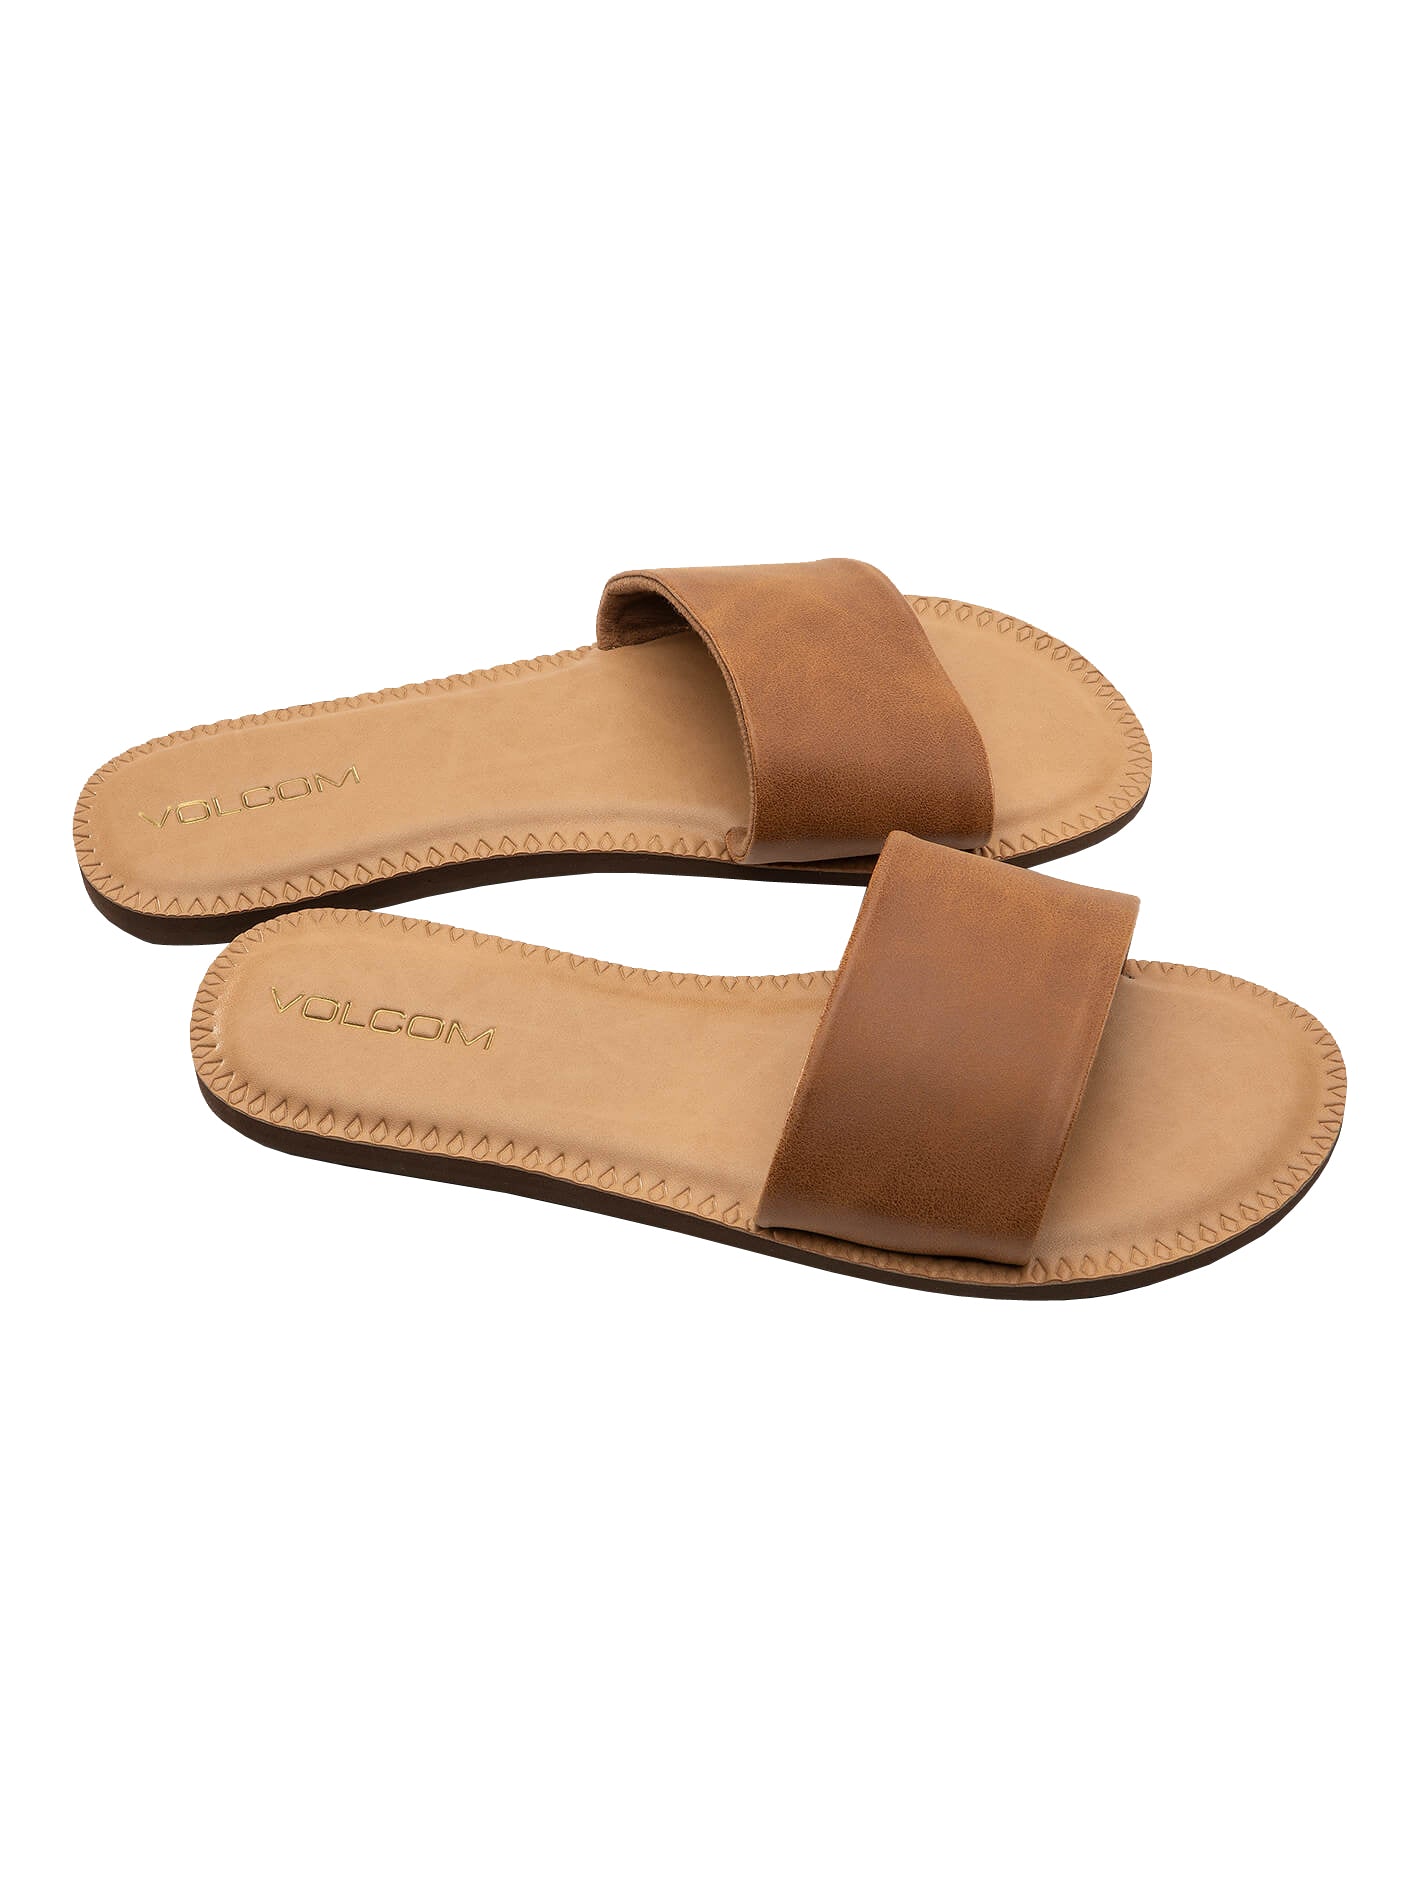 Volcom Simple Slide Womens Sandal TAN-Tan 10